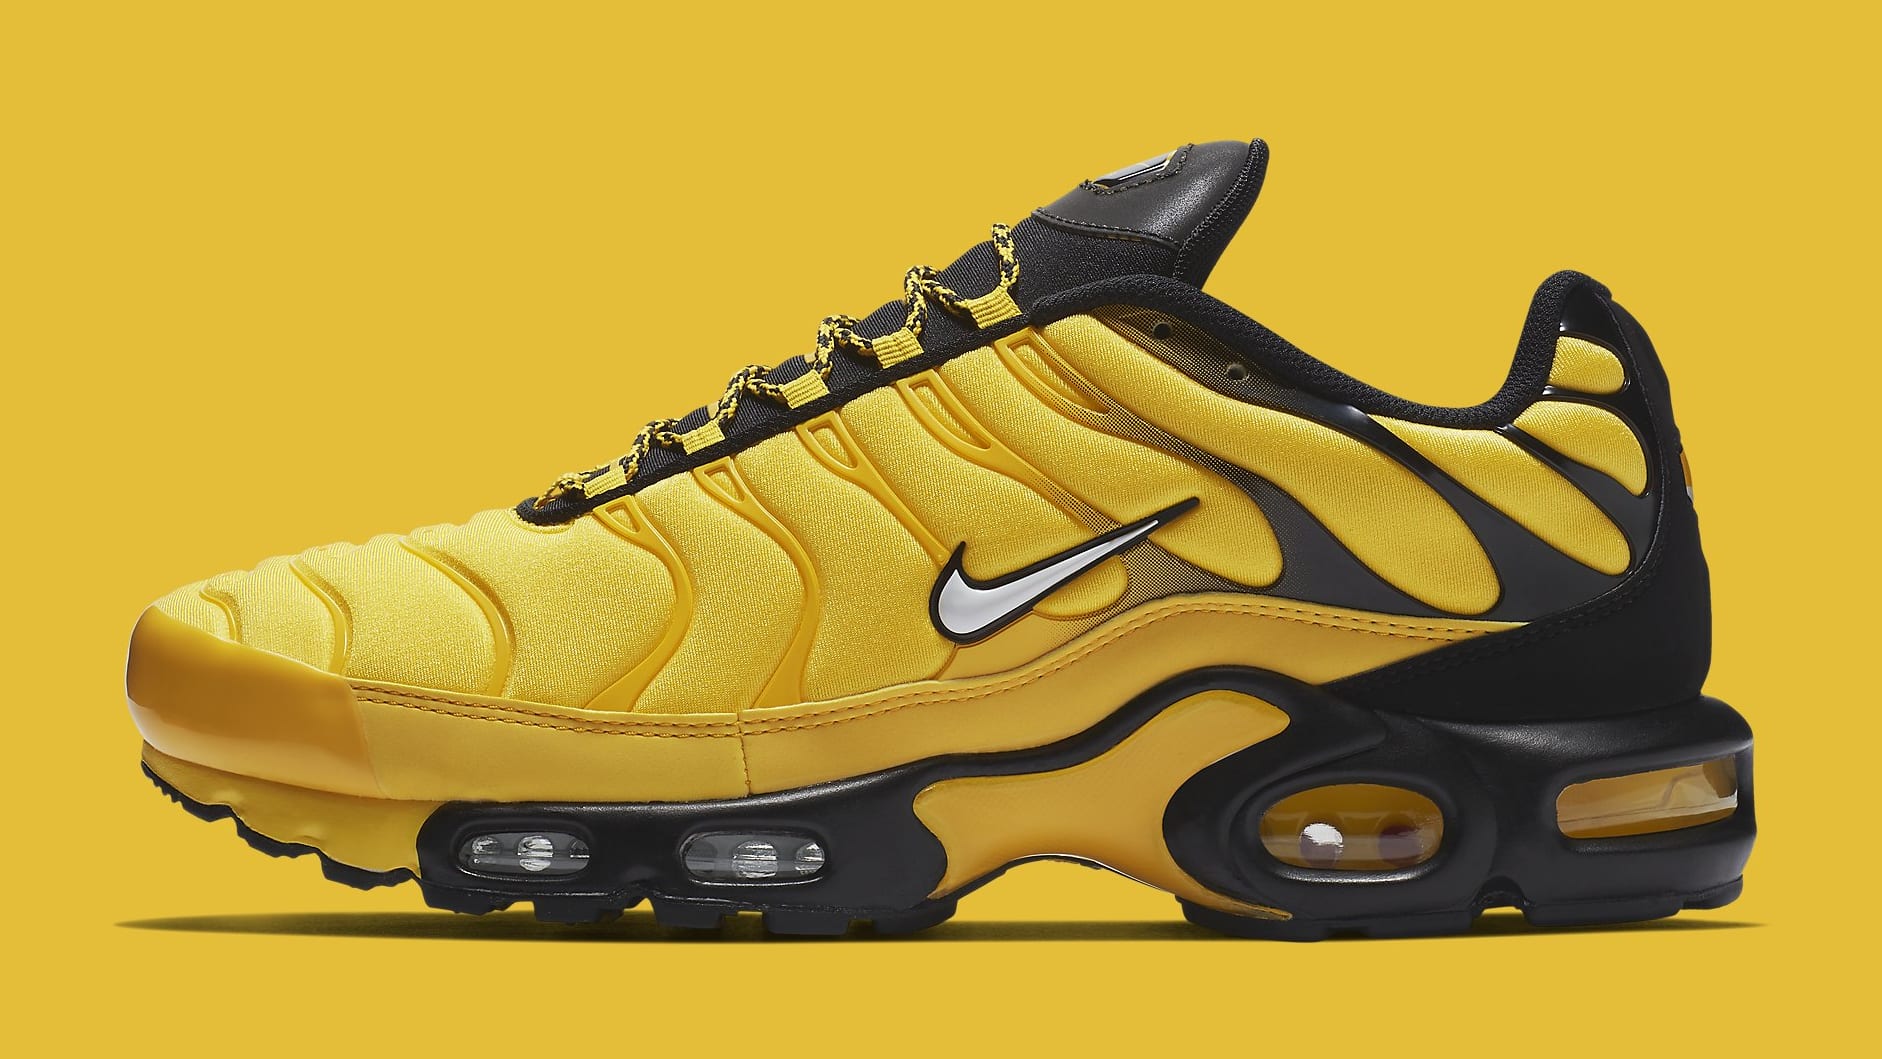 Wetland bank Voorverkoop Drake's Favorite Nikes Are Releasing in Bright Yellow | Complex